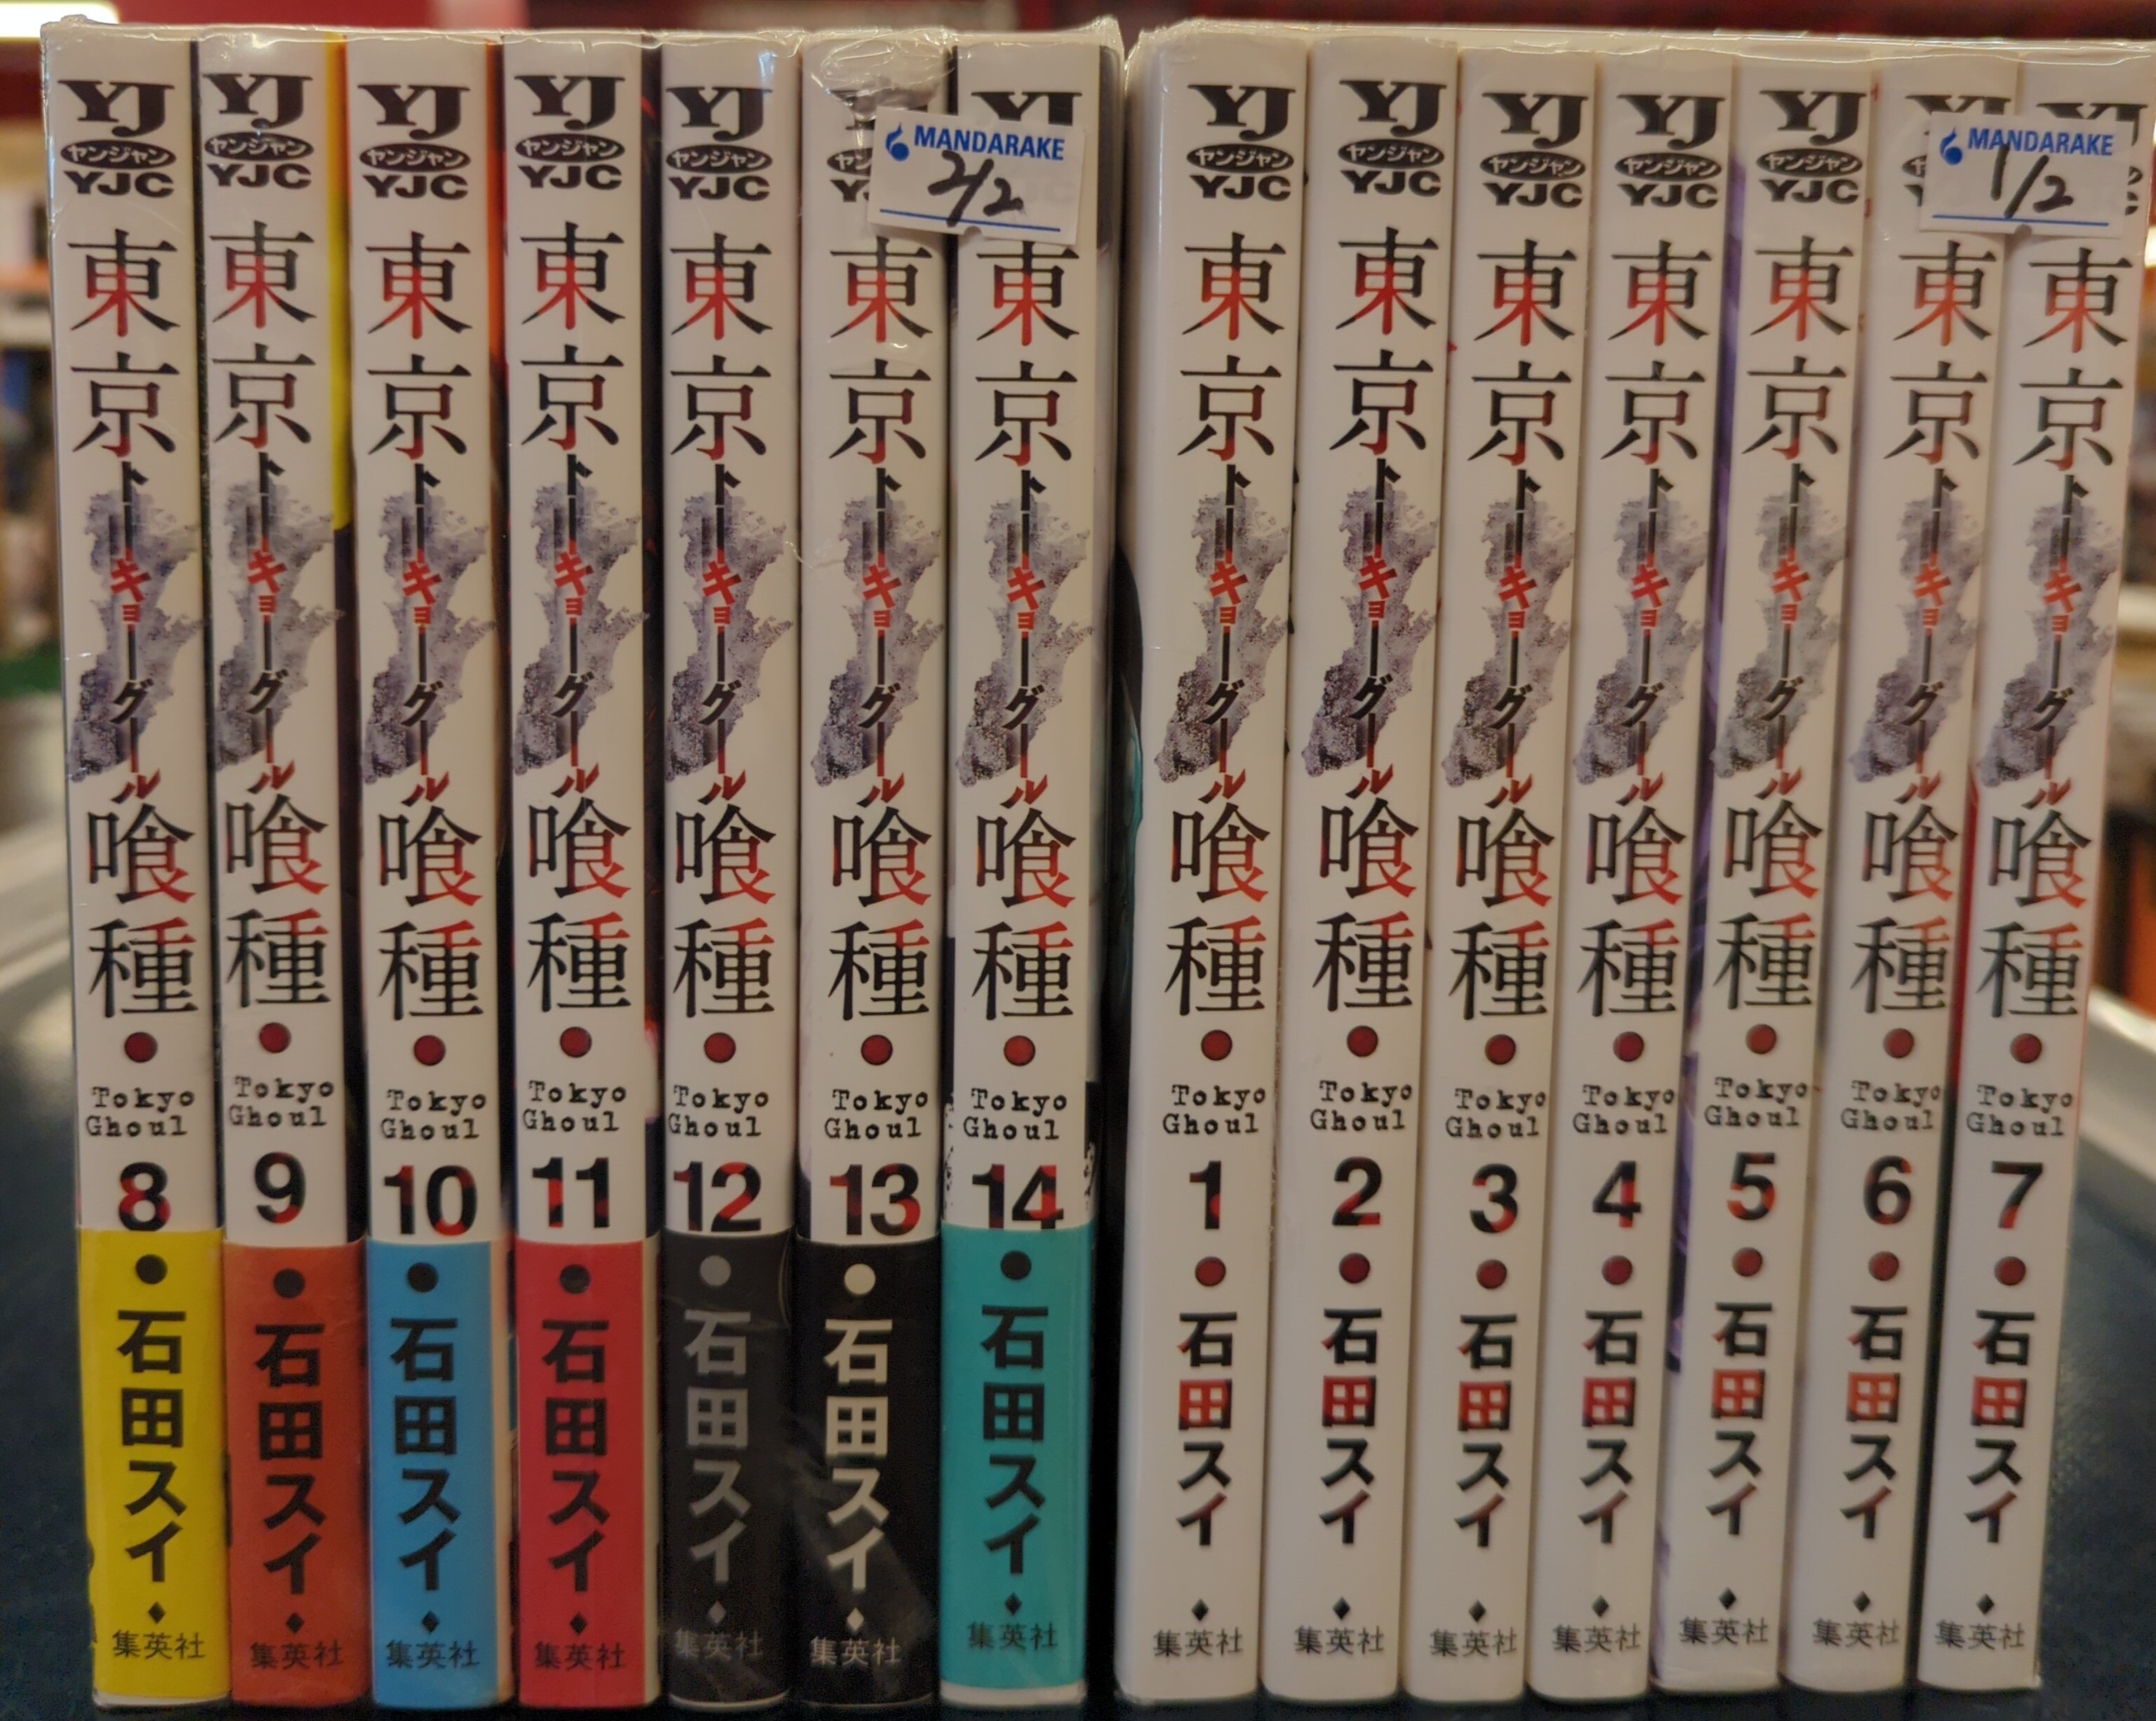 Tokyo Ghoul Comics Vol.1-14 Manga Complete Set Sui Ishida Japanese